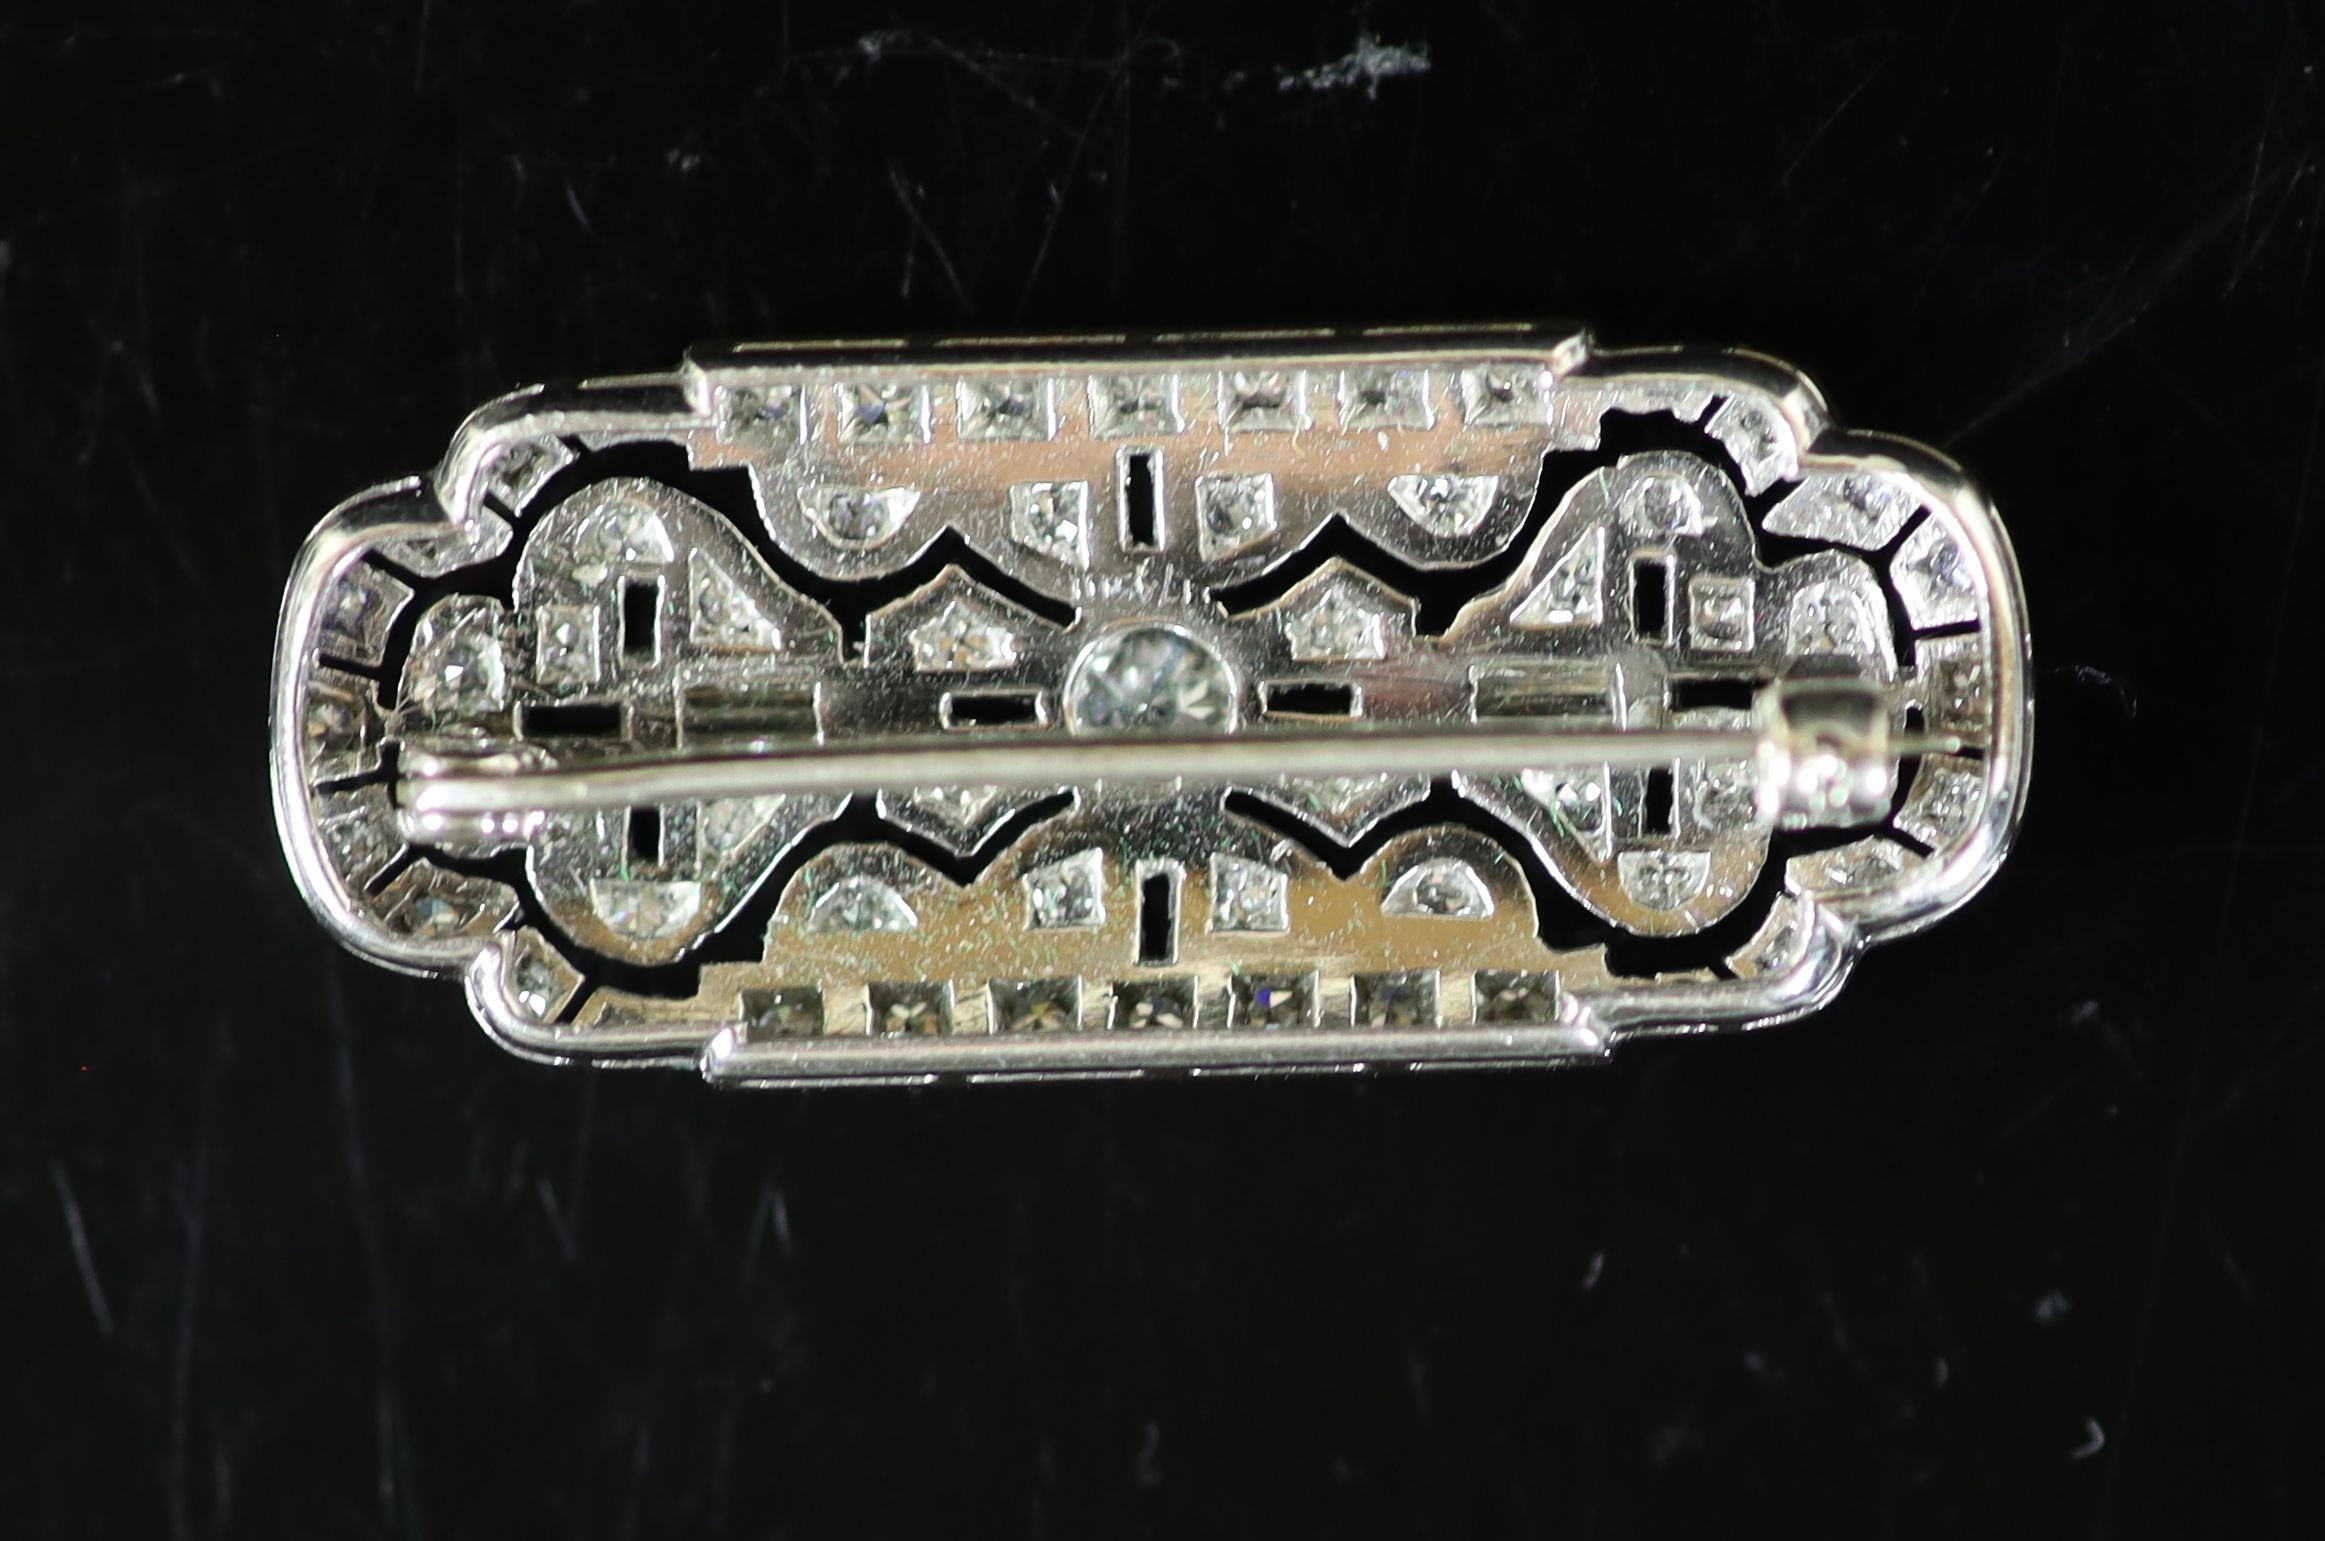 An Art Deco style pierced platinum, round and baguette cut diamond set shaped rectangular brooch